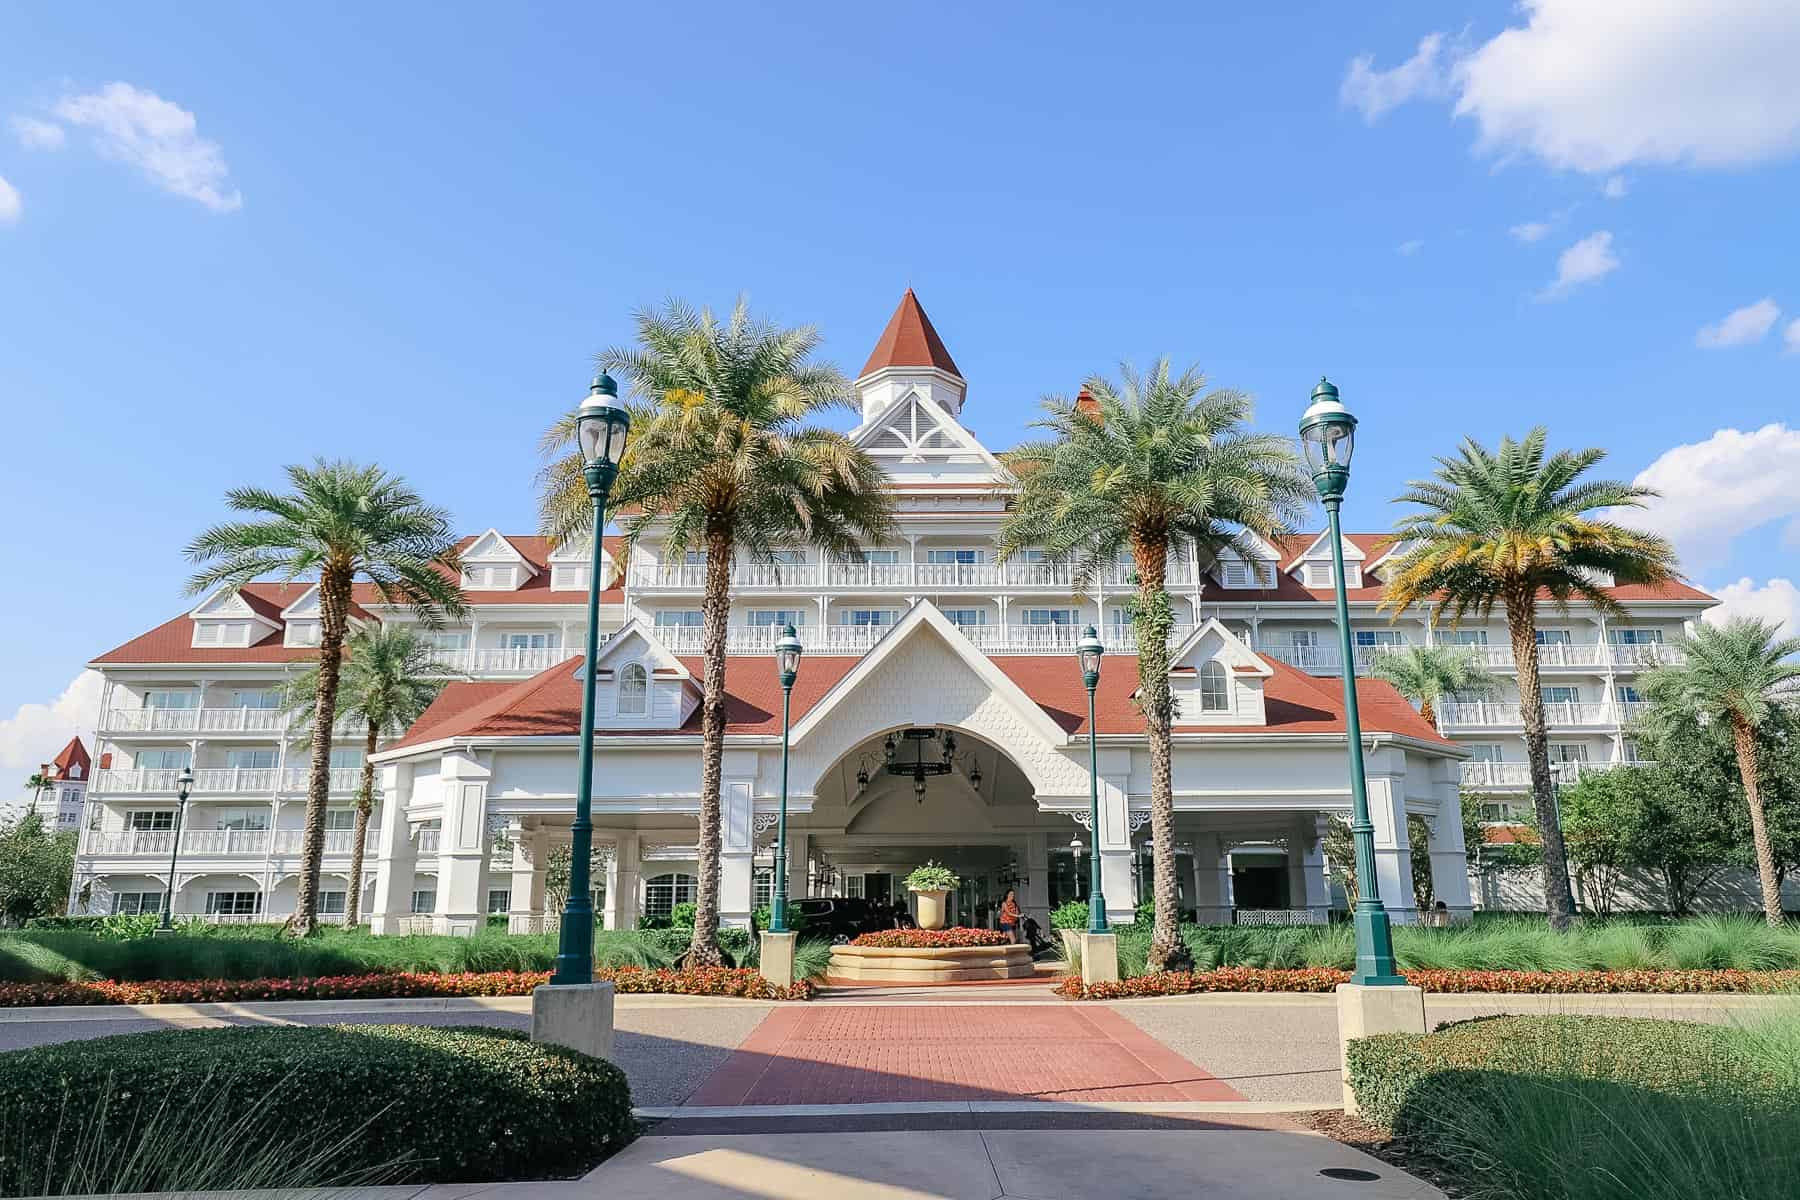 Grand Floridian Villa port co-chere 